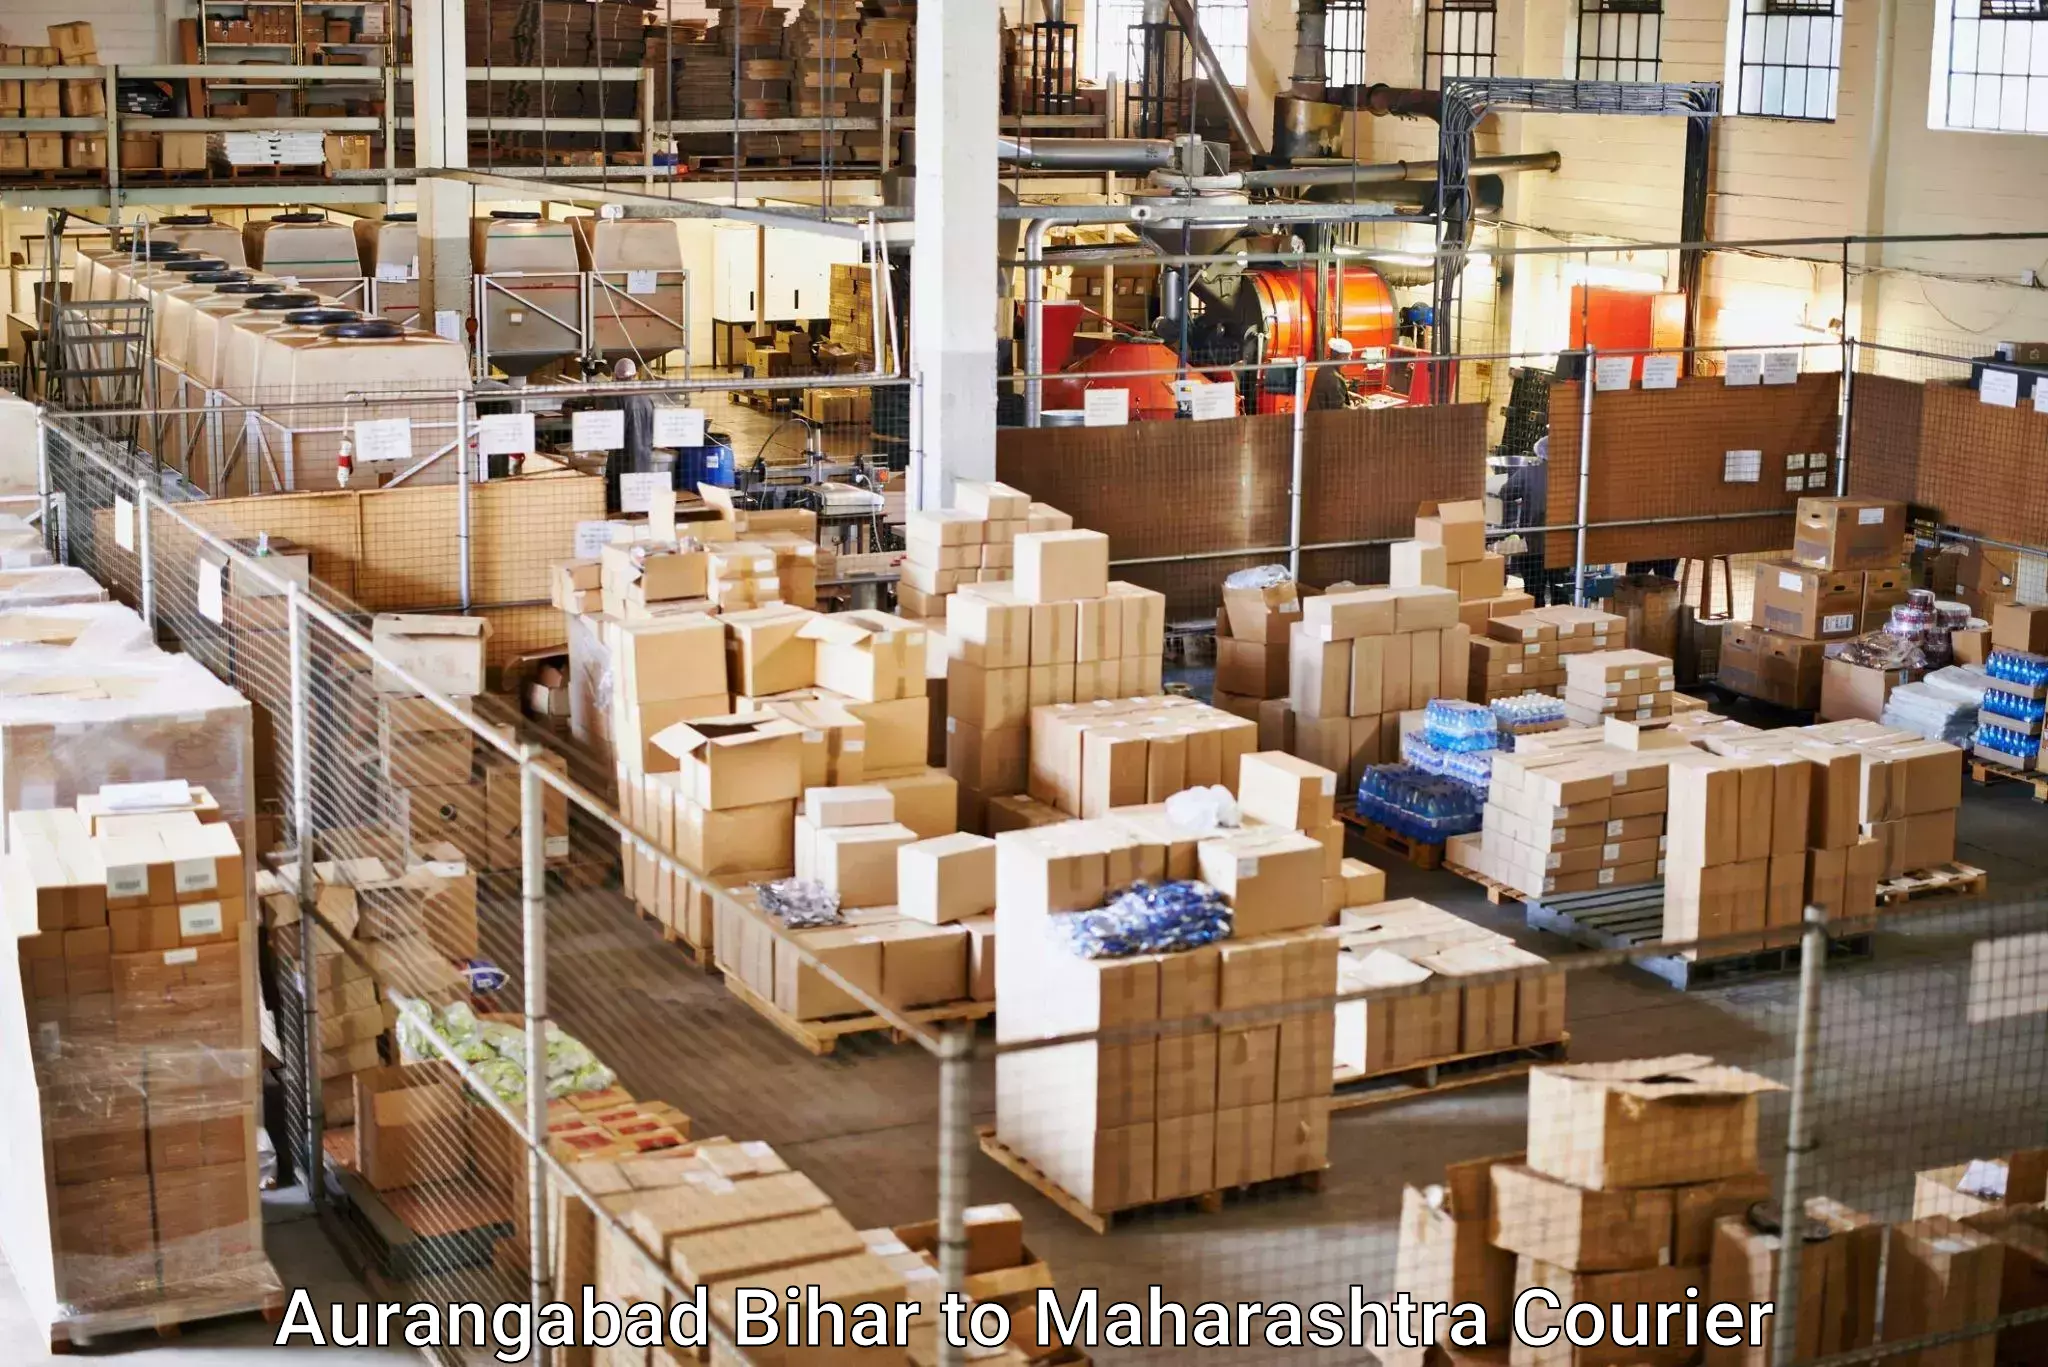 High-performance logistics Aurangabad Bihar to Pune